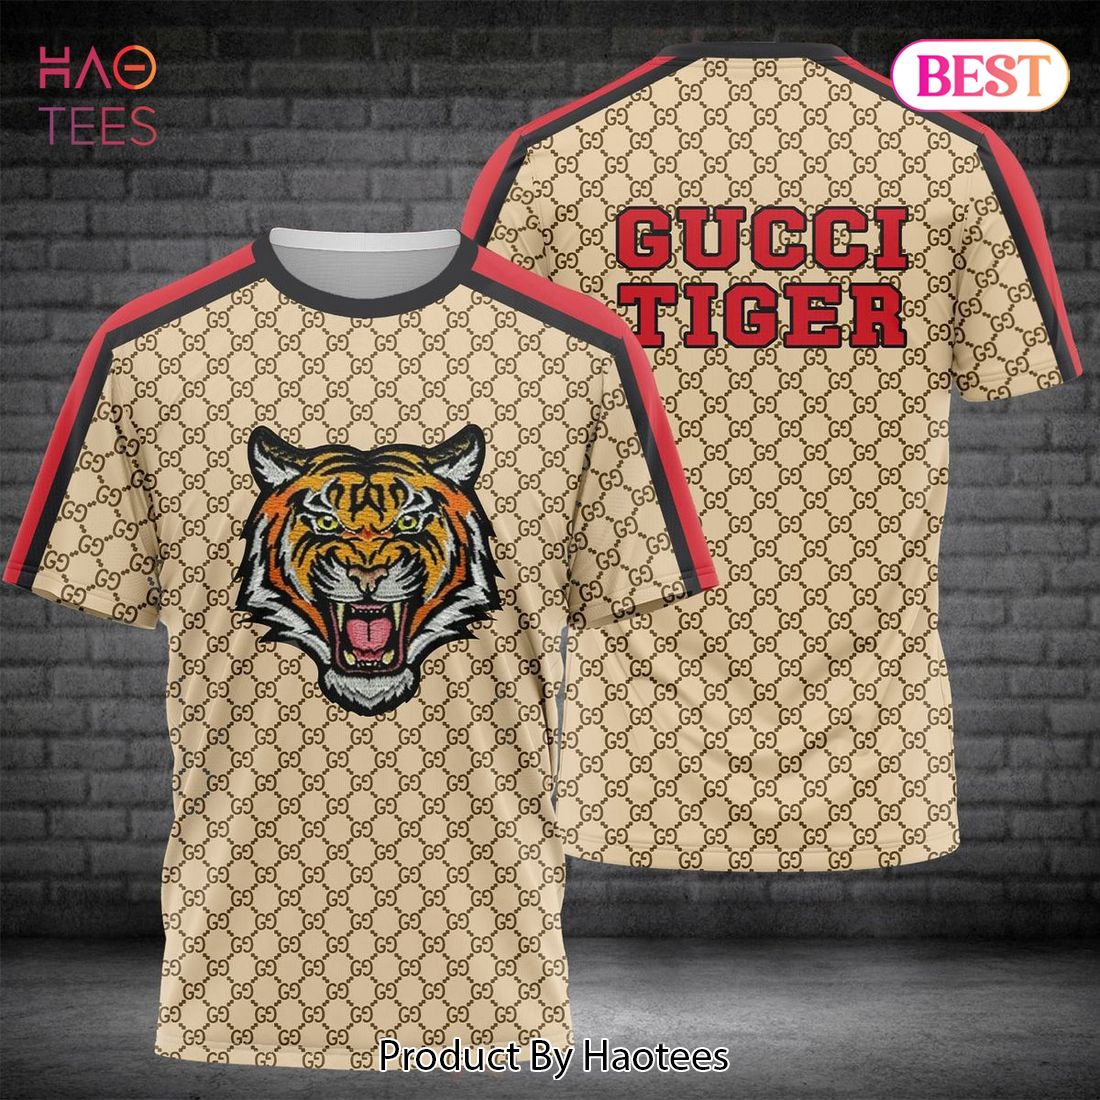 HOT Gucci Tiger Full Printing Luxury Brand 3D T-Shirt